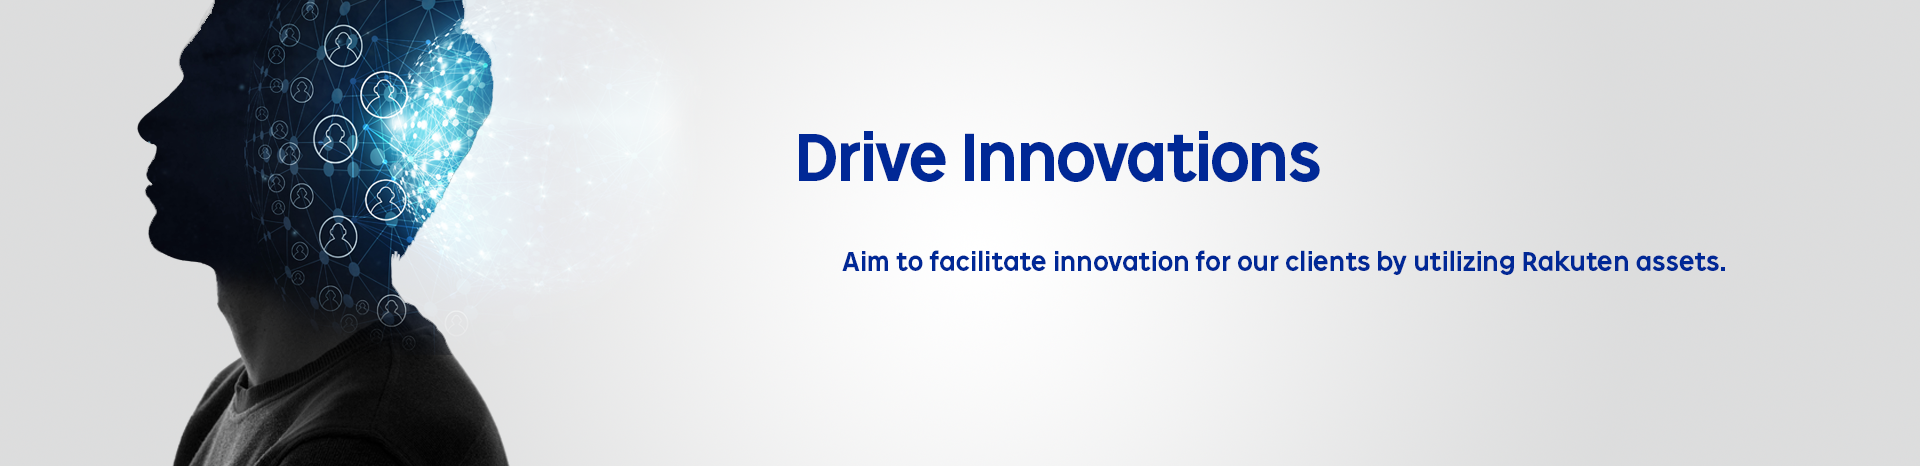 Drive Innovations